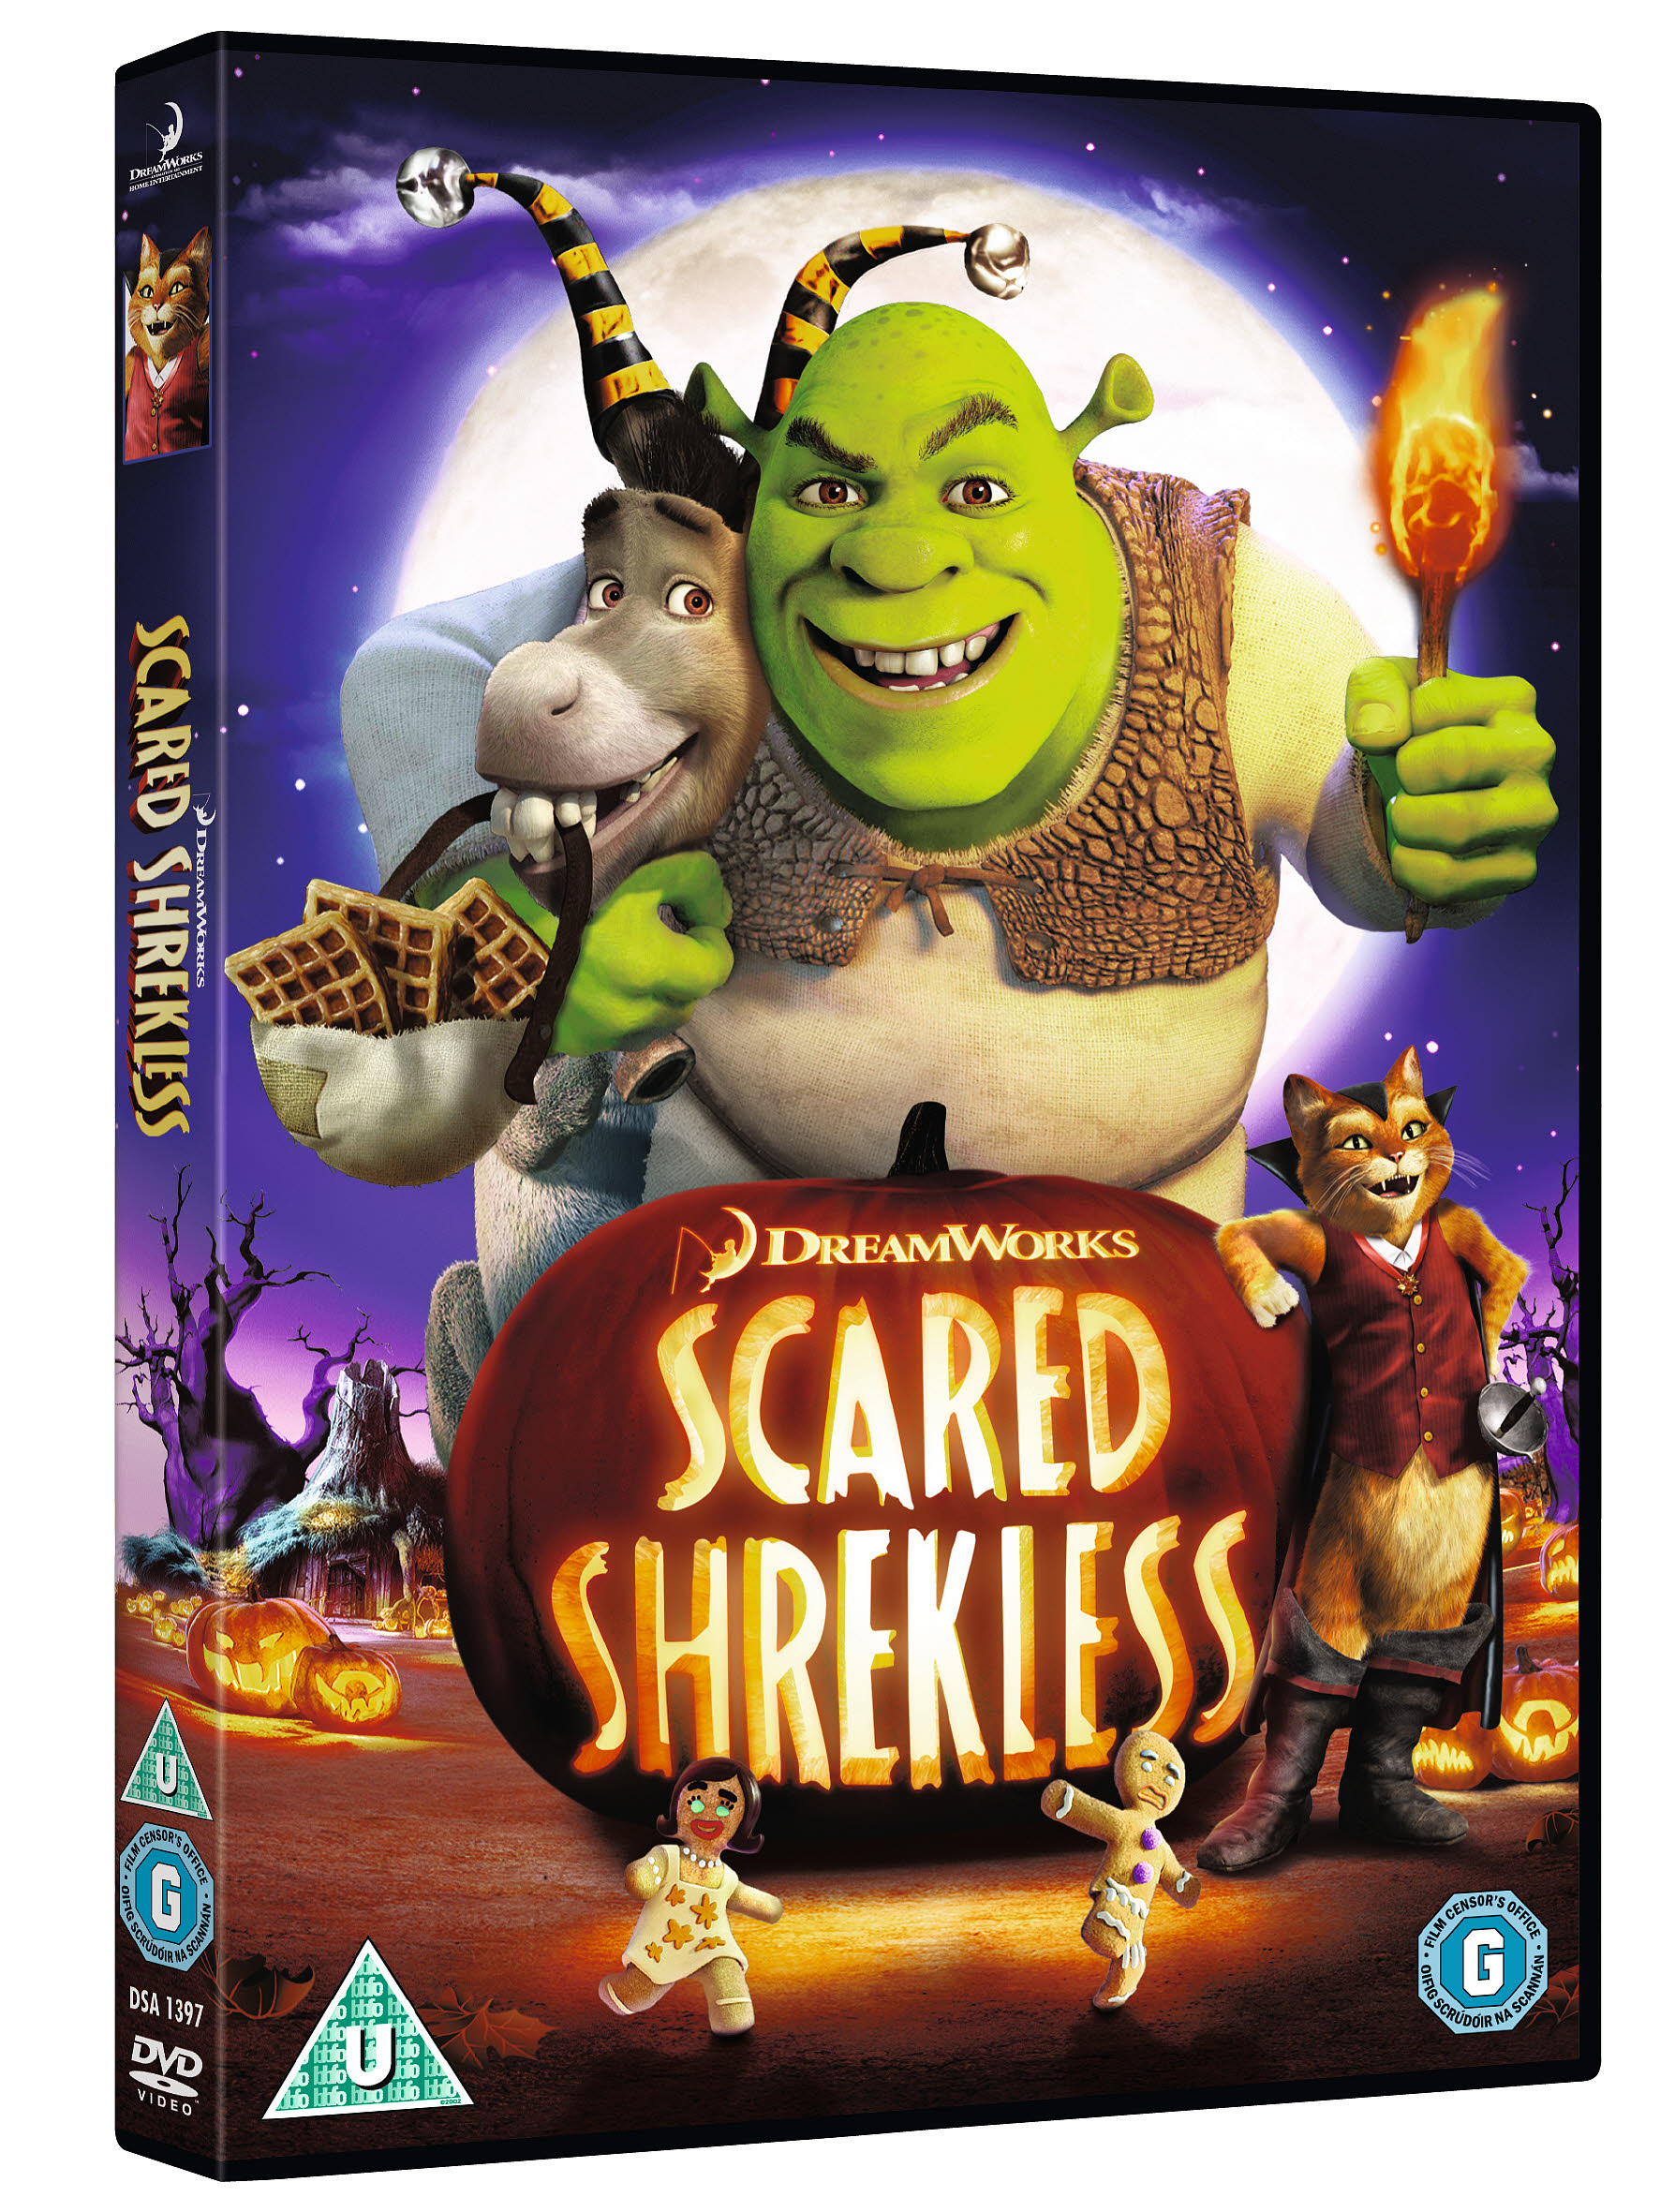 Win the latest Shrek adventure for this Halloween